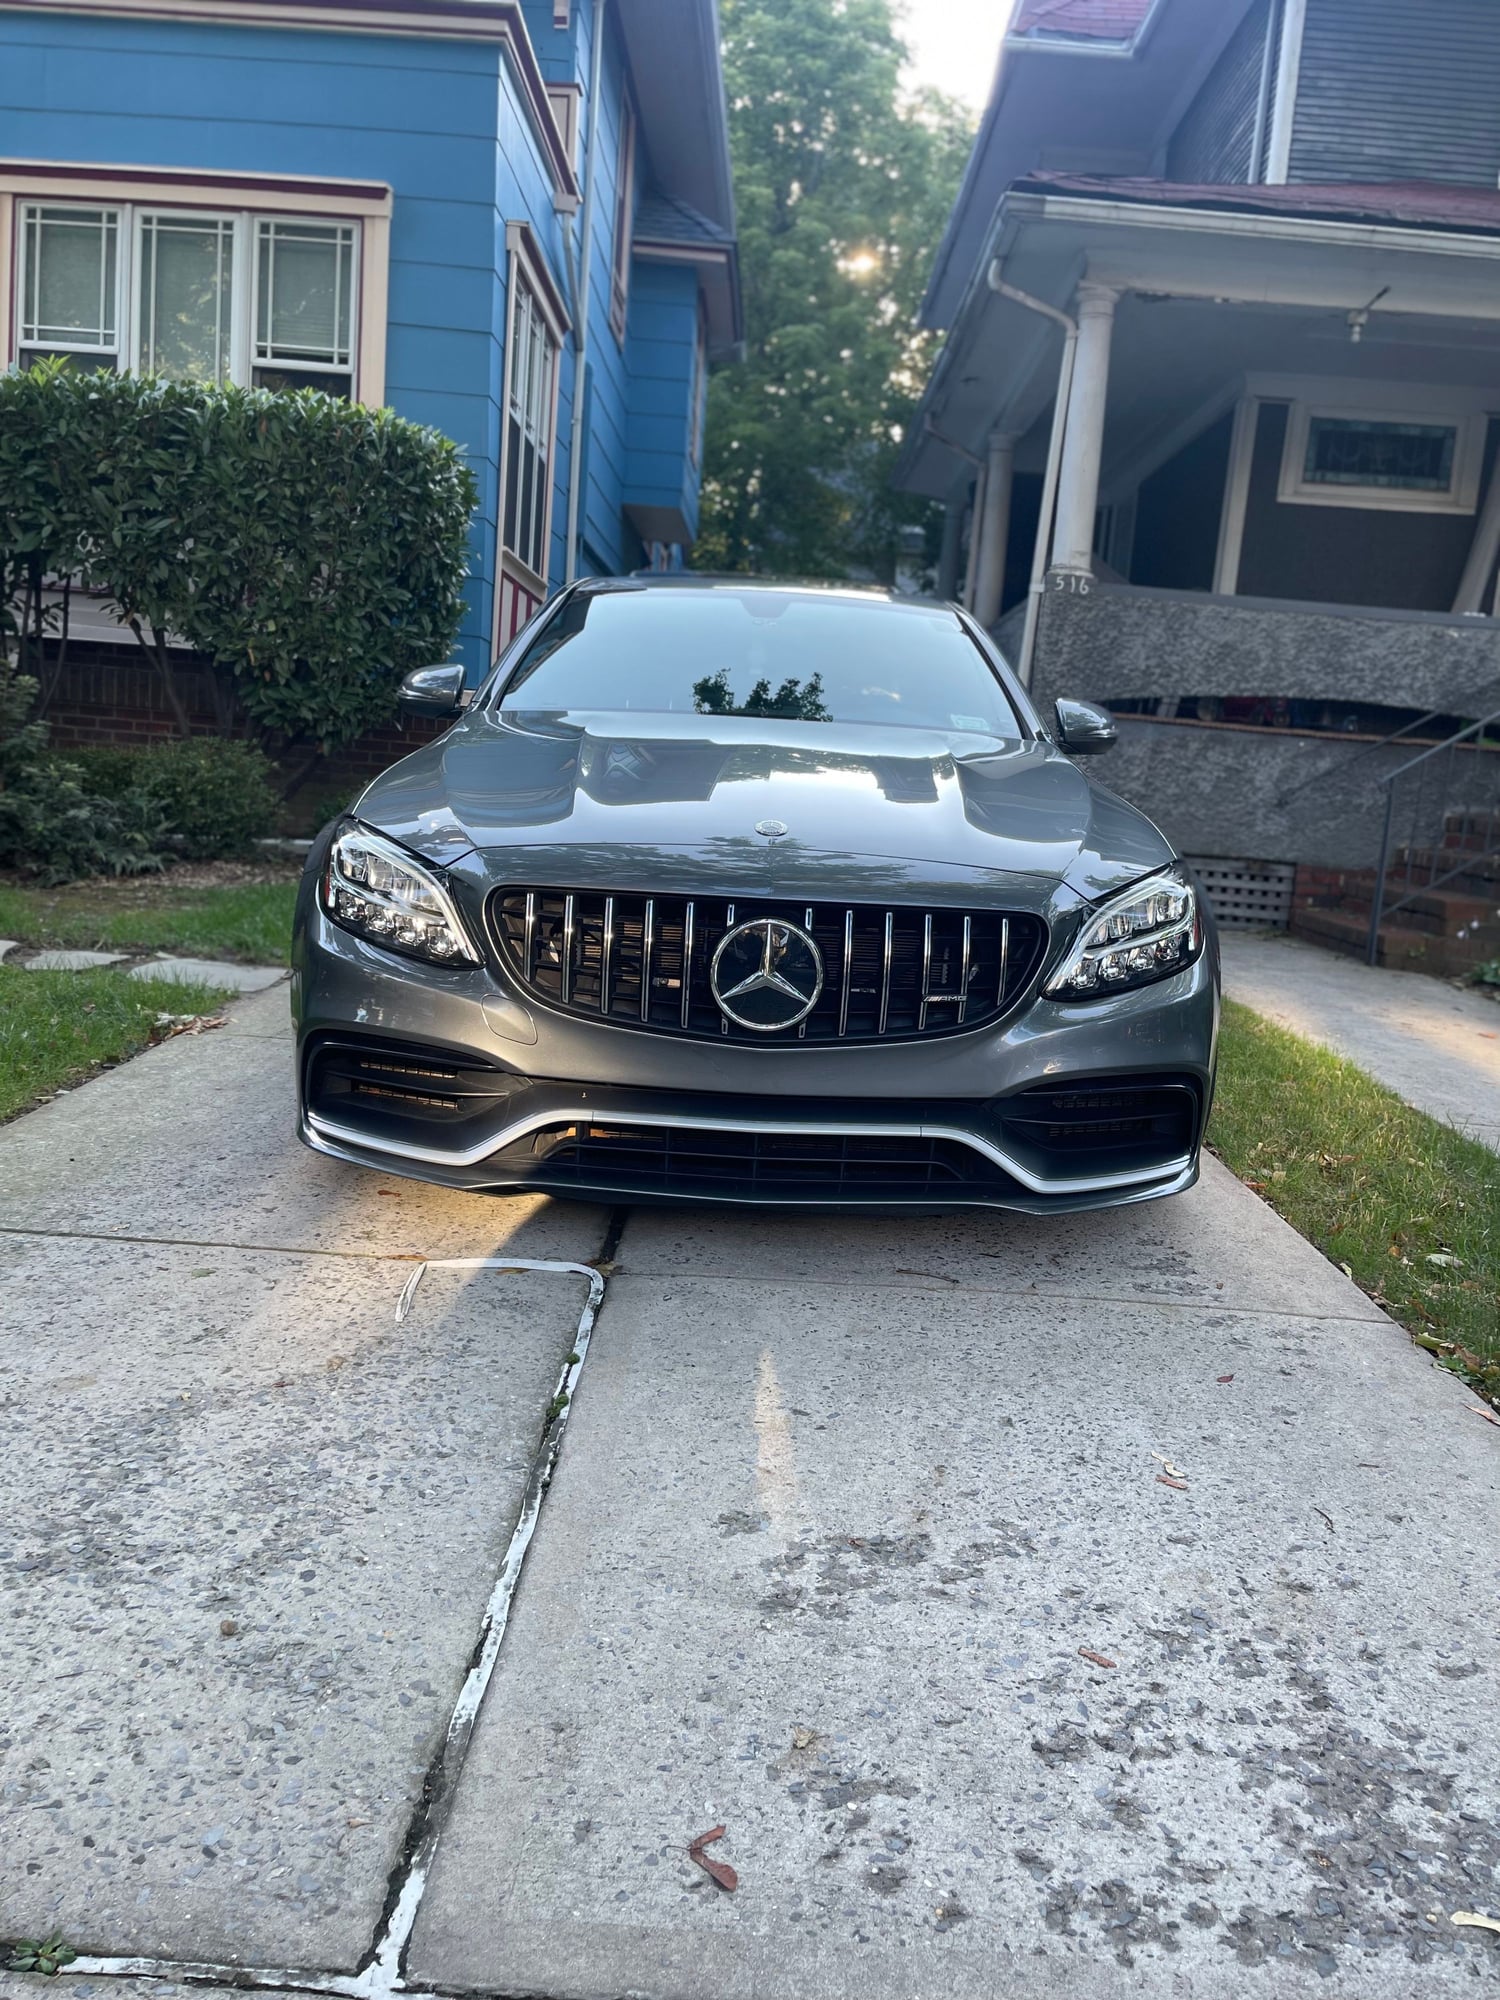 2019 Mercedes-Benz C63 AMG - 2019 c63 sedan selenite gray - Used - VIN 55swf8gb2ku306070 - 18,700 Miles - 8 cyl - 2WD - Automatic - Sedan - Gray - New York, NY 11203, United States